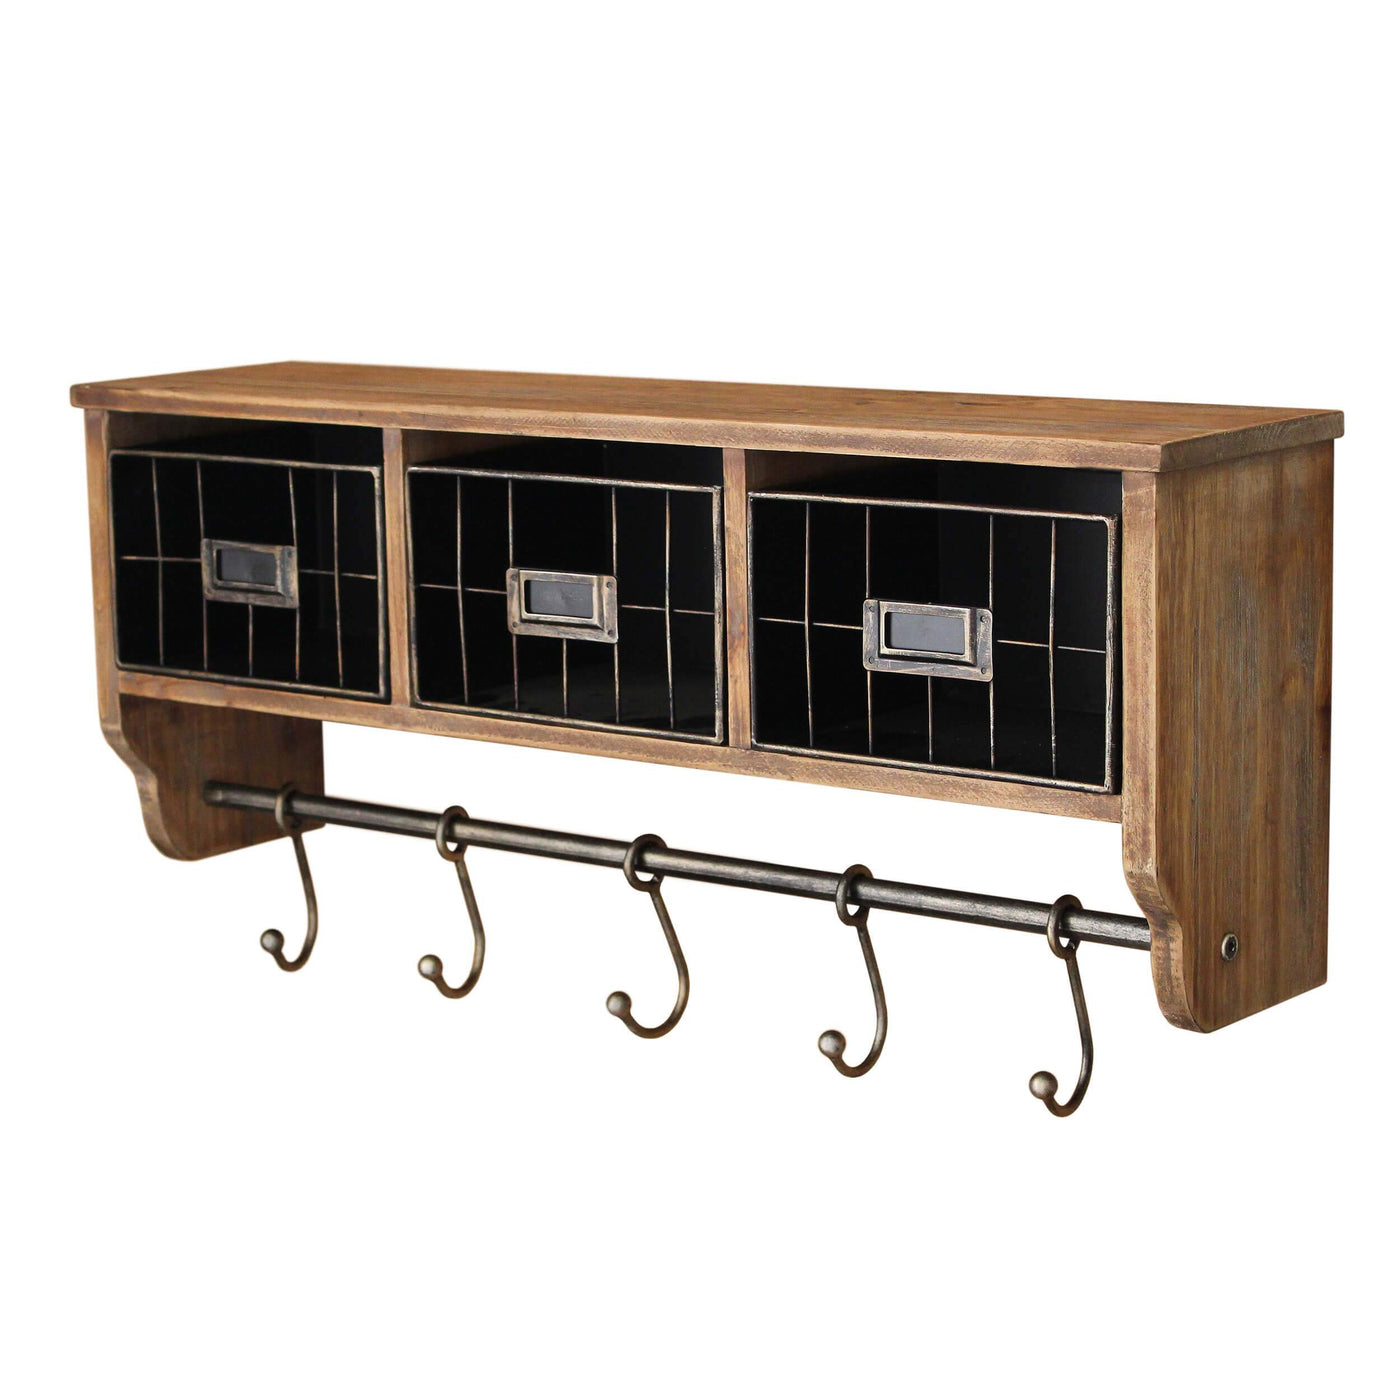 24" Rustic Wall Mounted Coat Rack With Shelf & 3 Baskets - Entryway Shelf/Coffee Bar Shelf